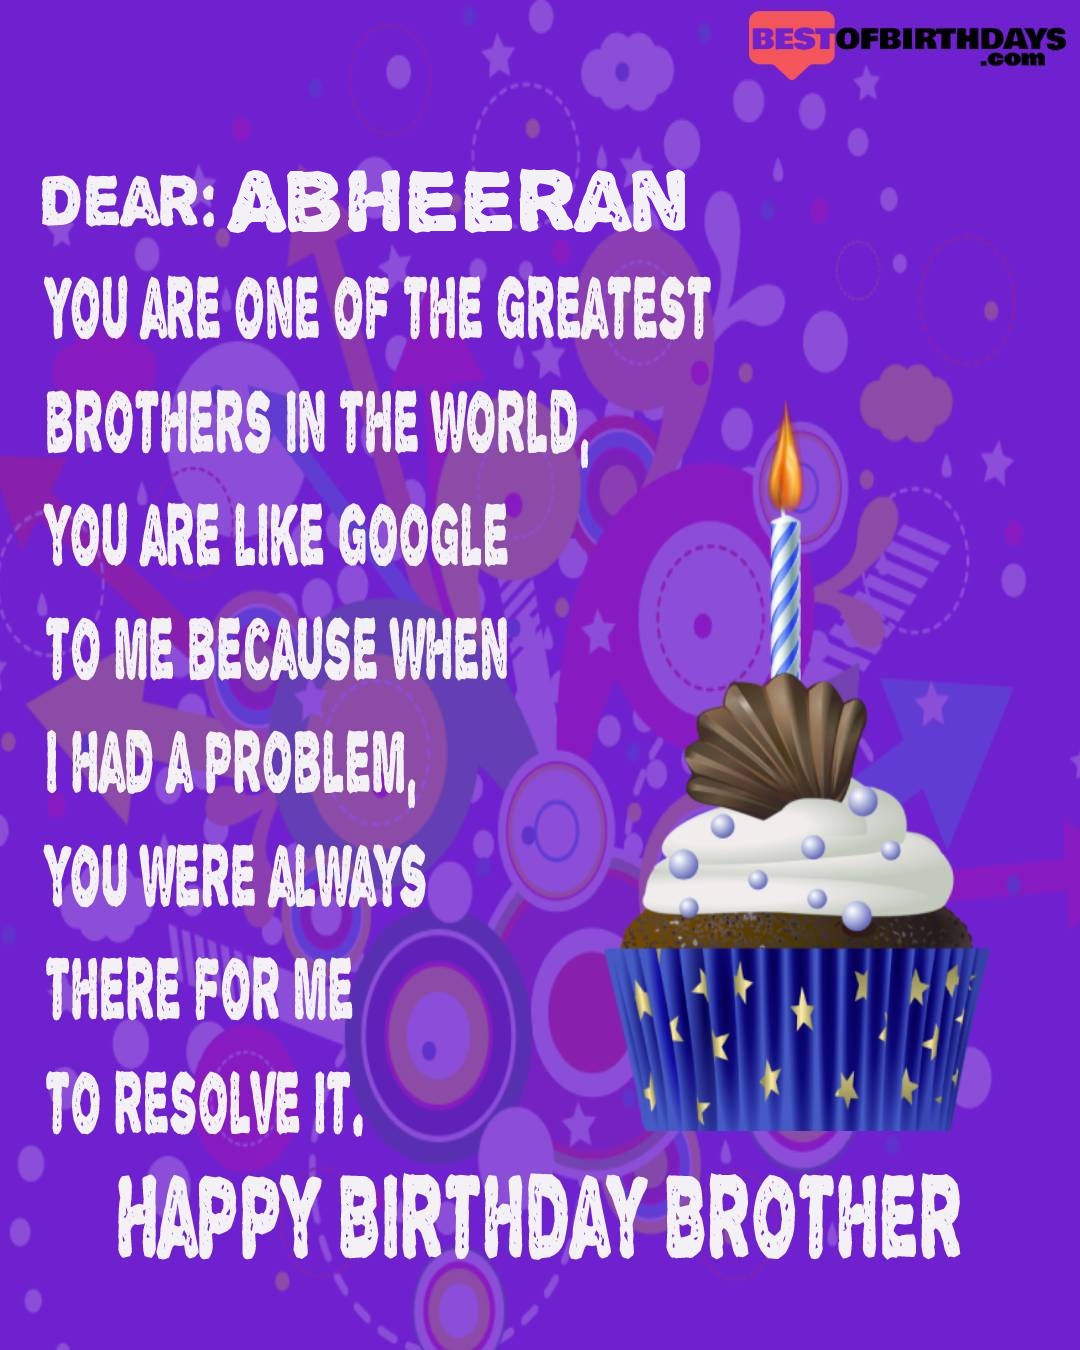 Happy birthday abheeran bhai brother bro